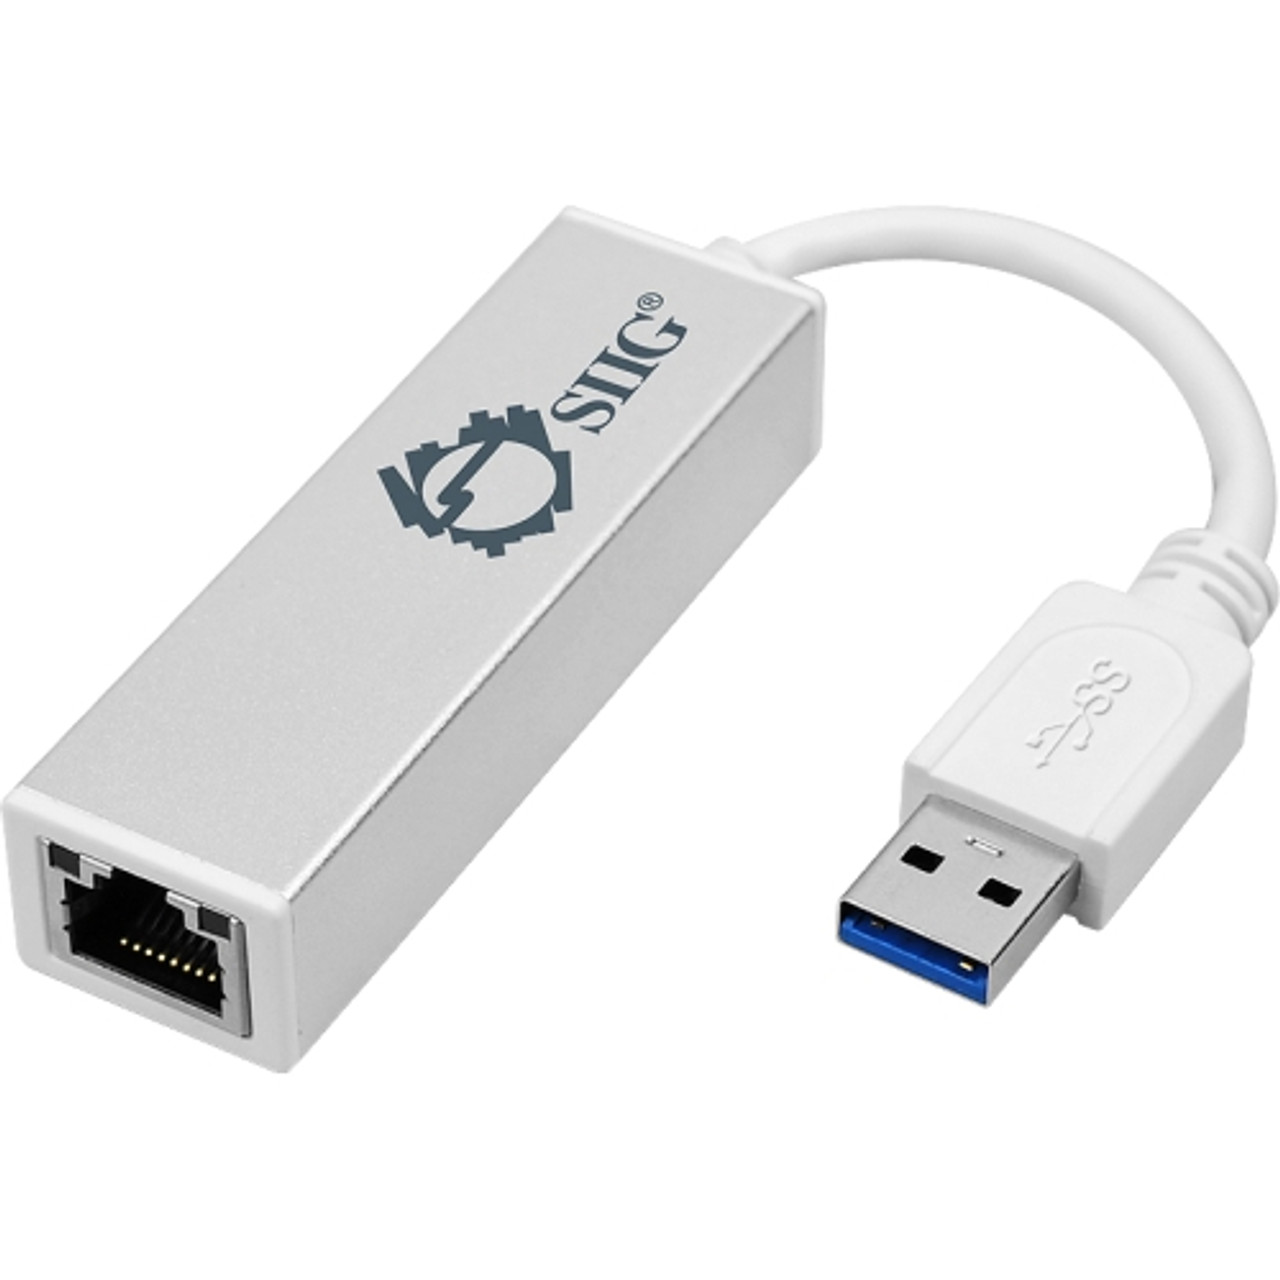 JU-NE0511-S1 SIIG Pro 10/100/1000 Single Port USB 3.0 Gigabit Ethernet Adapter